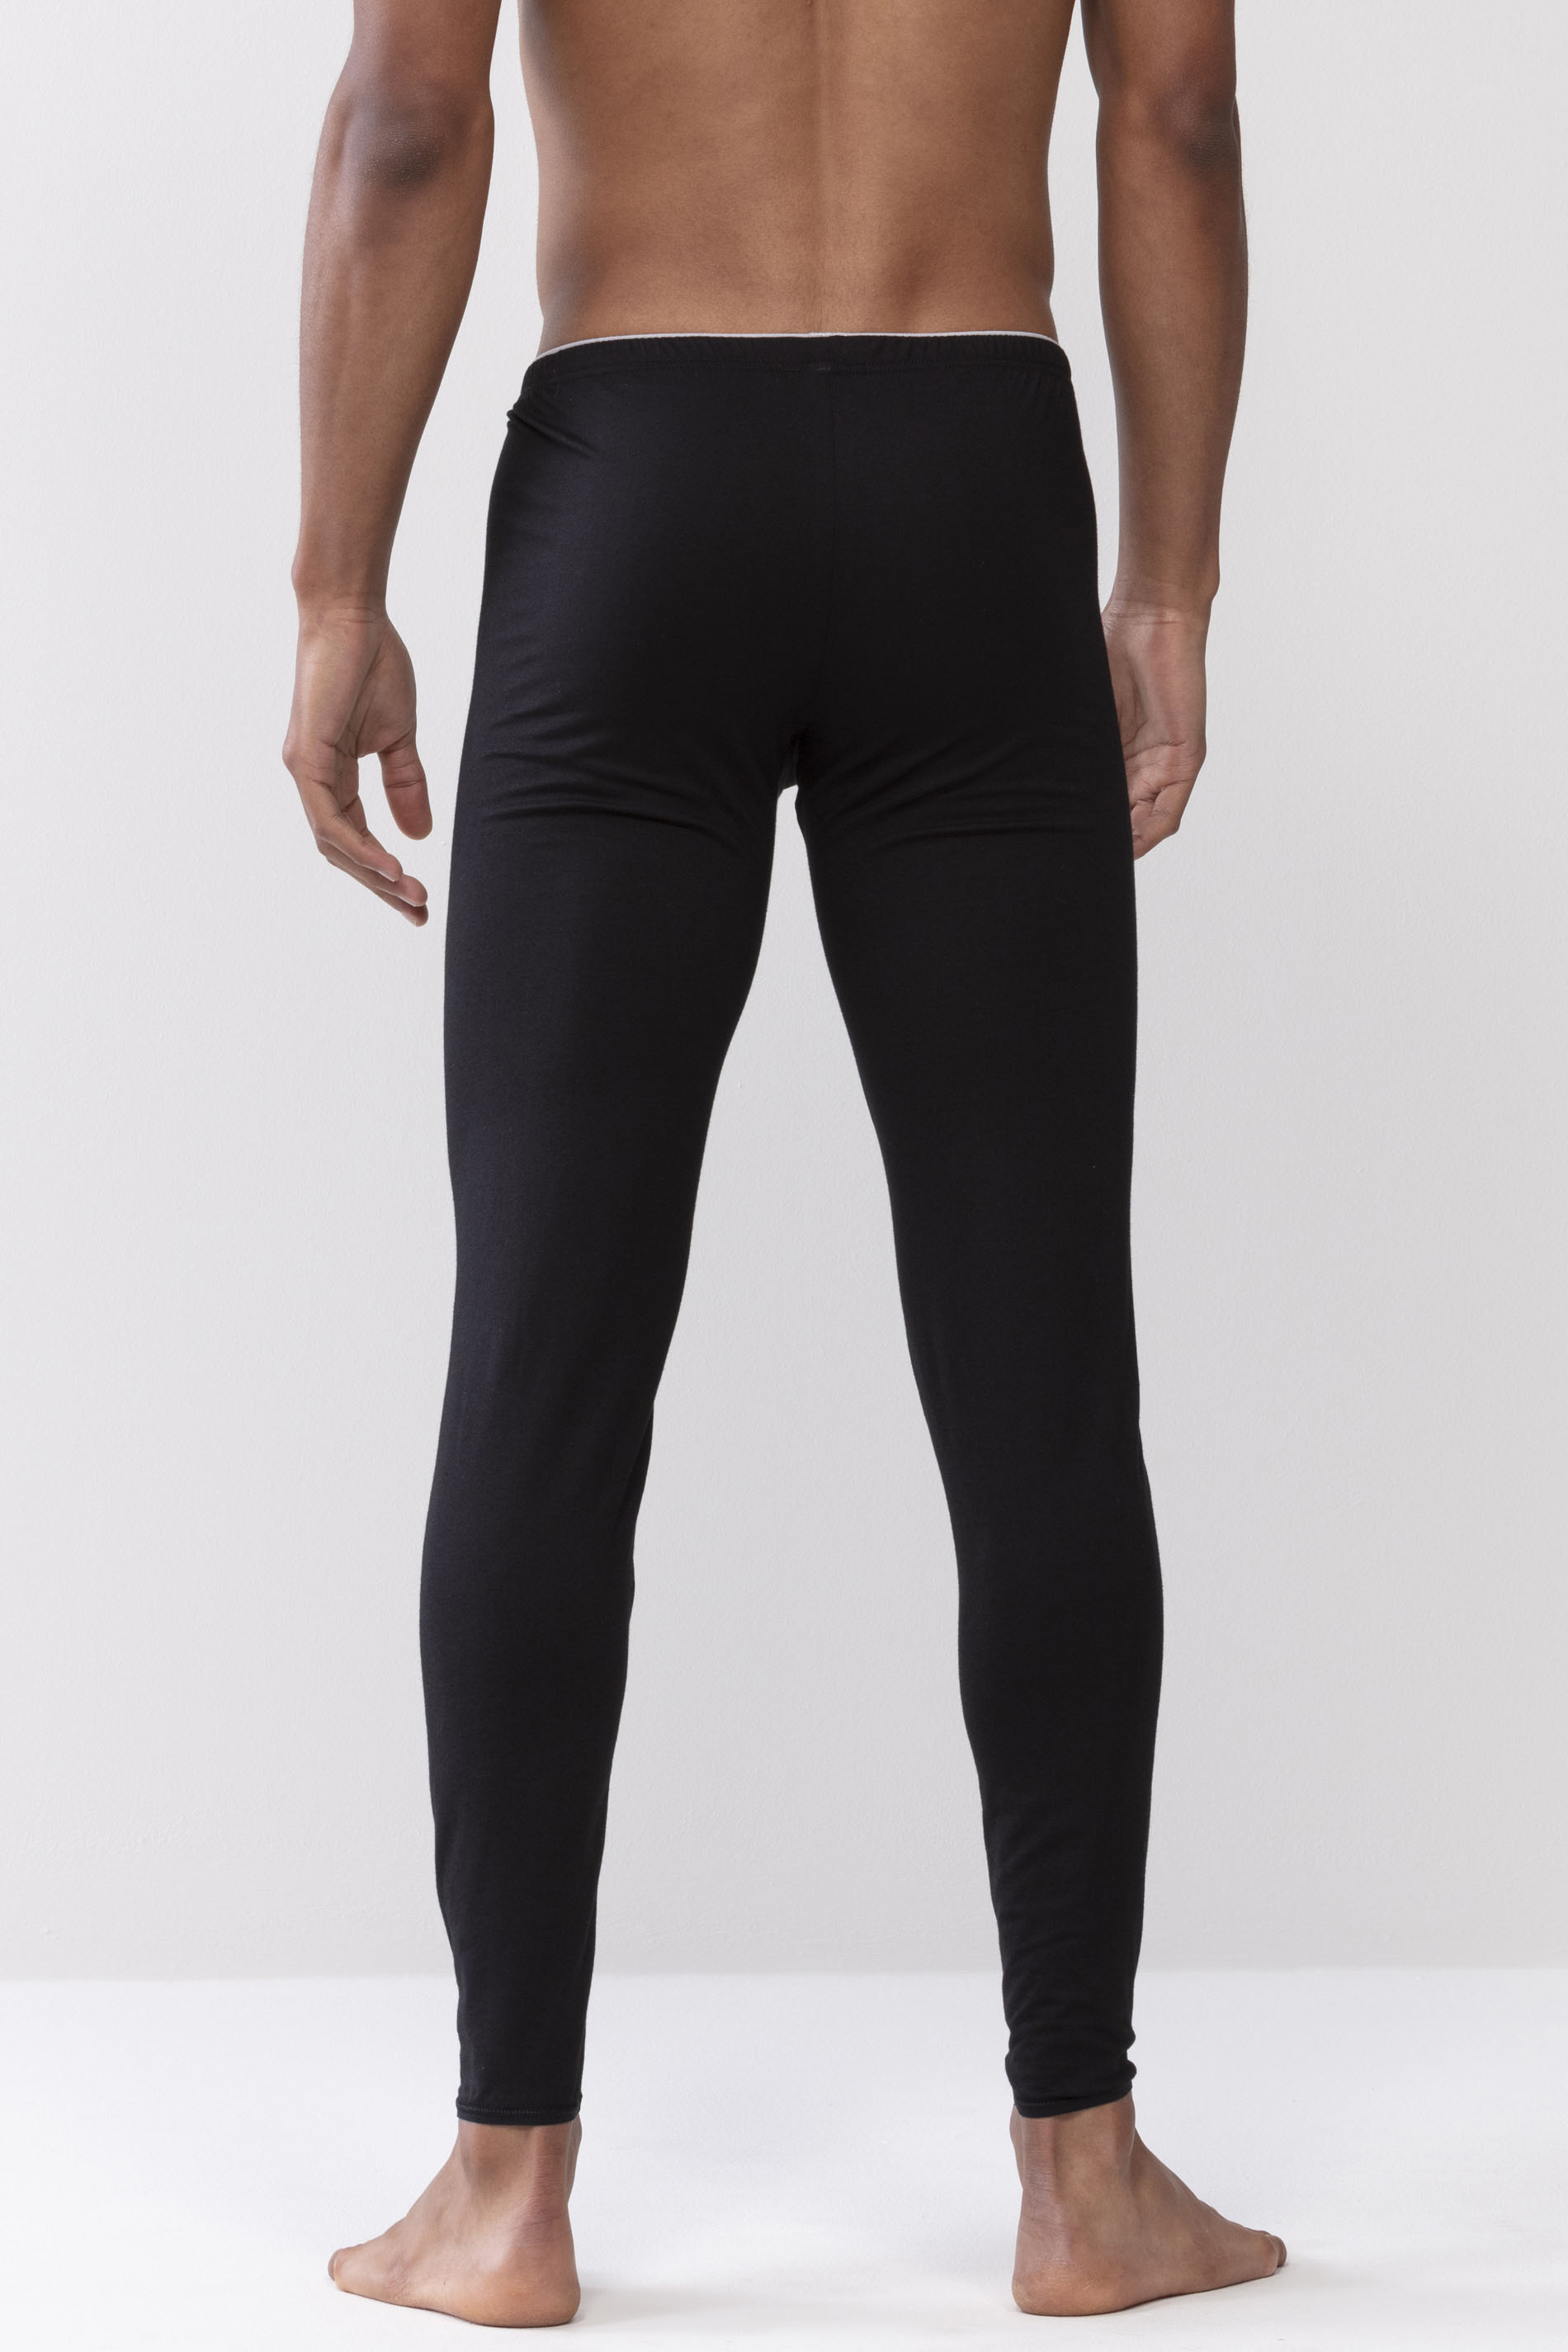 Long-Shorts Black Serie Dry Cotton Rear View | mey®